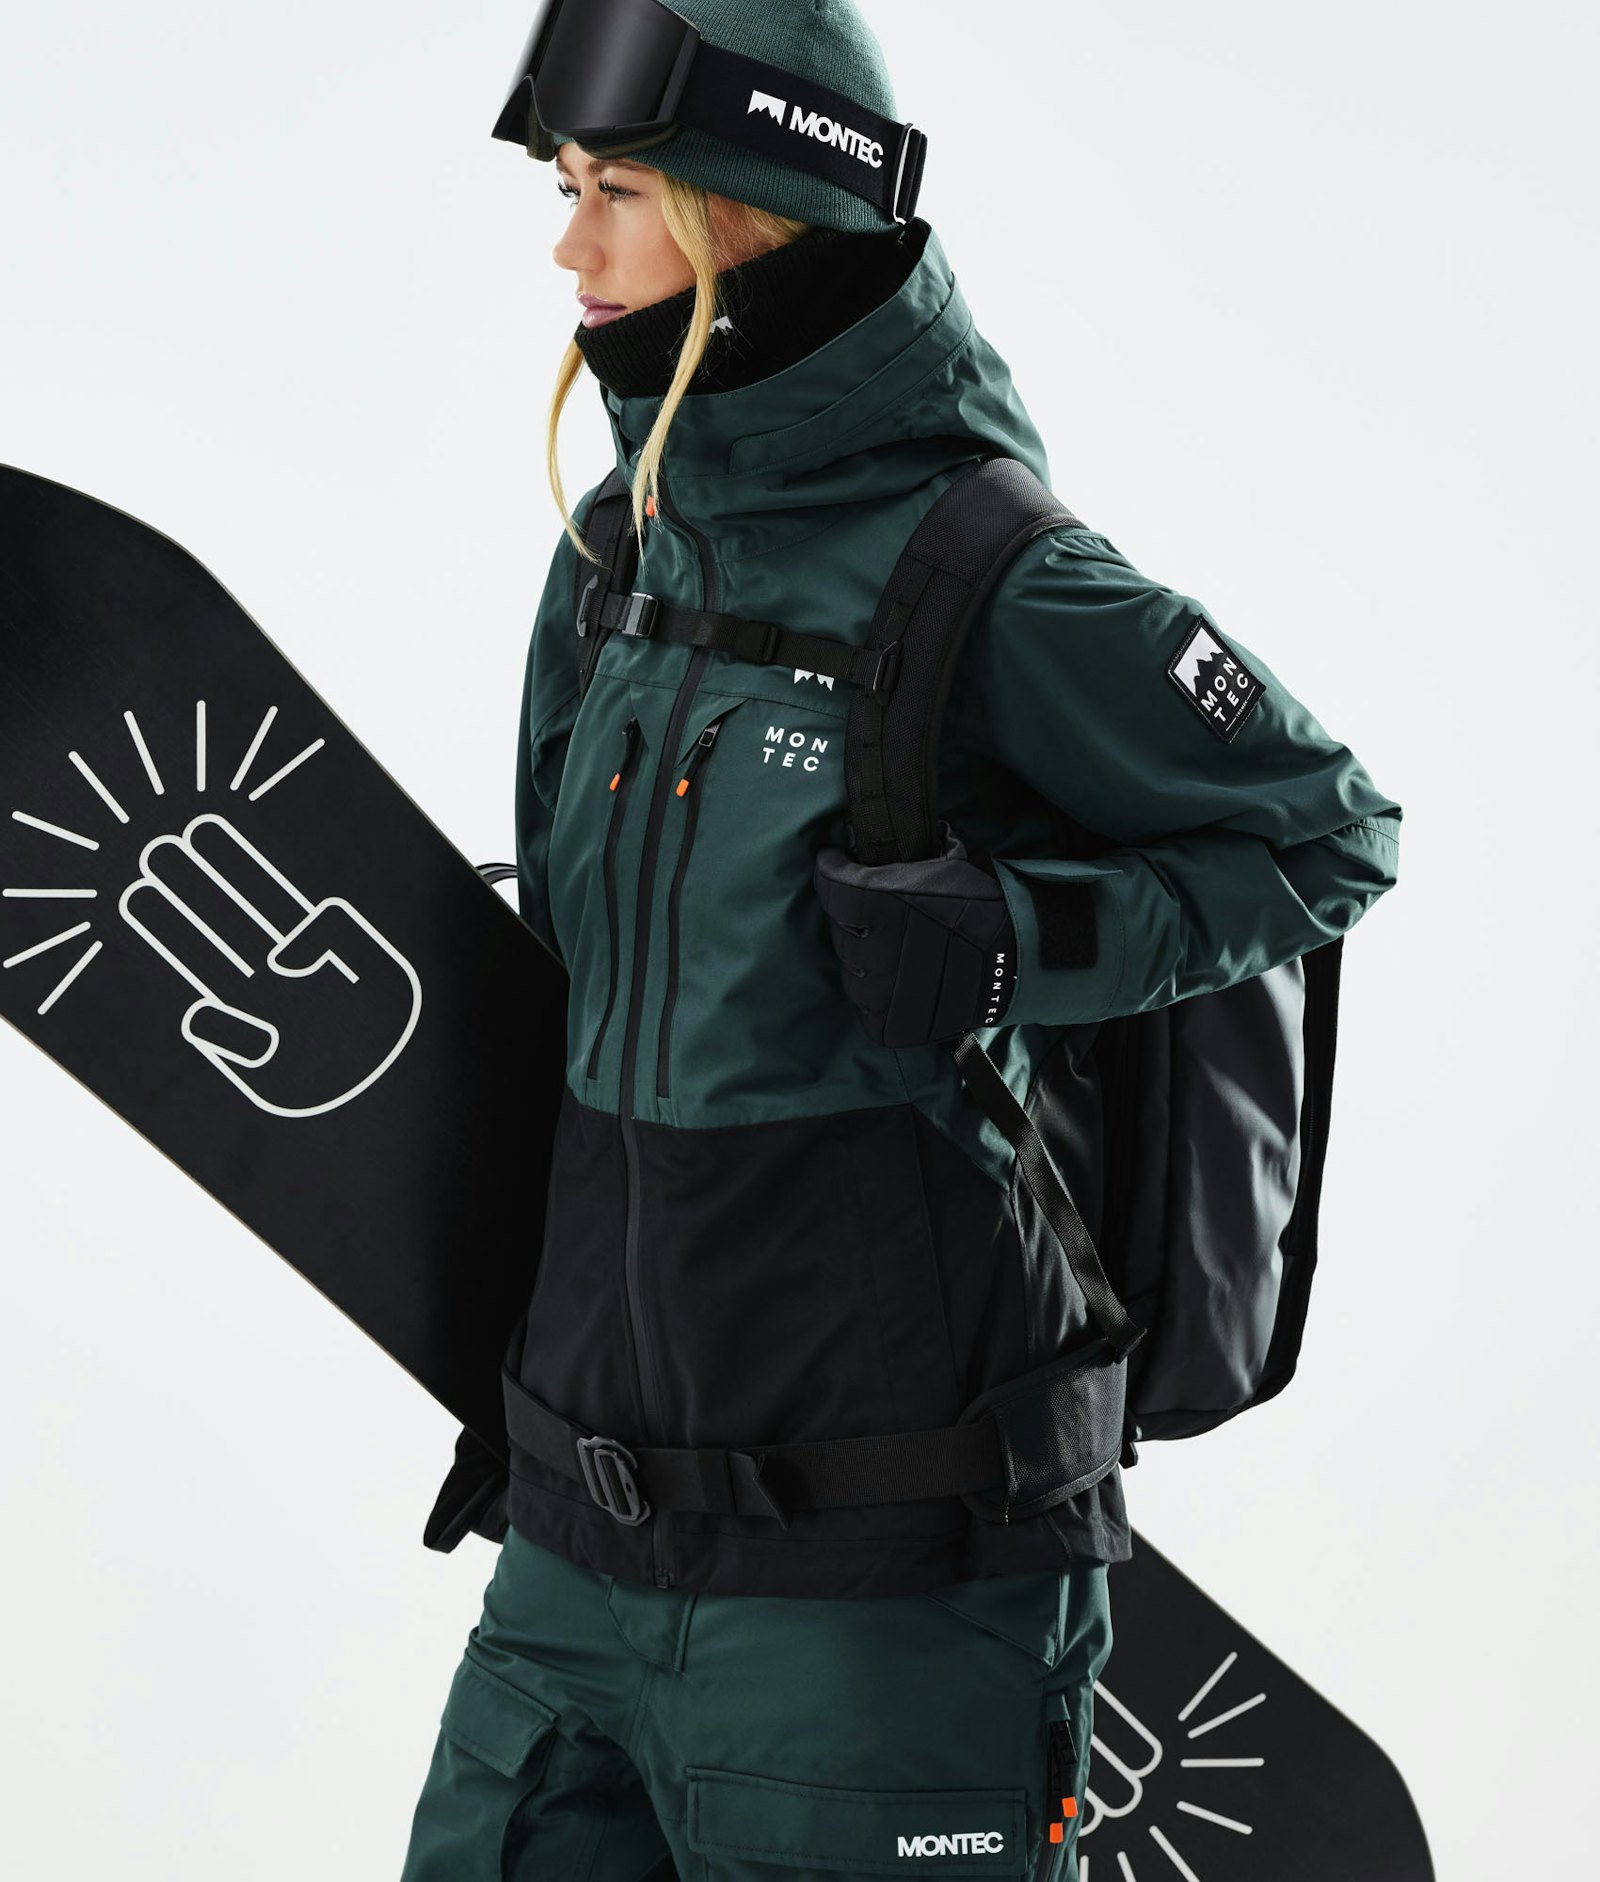 Moss W 2021 Veste Snowboard Femme Dark Atlantic/Black Renewed